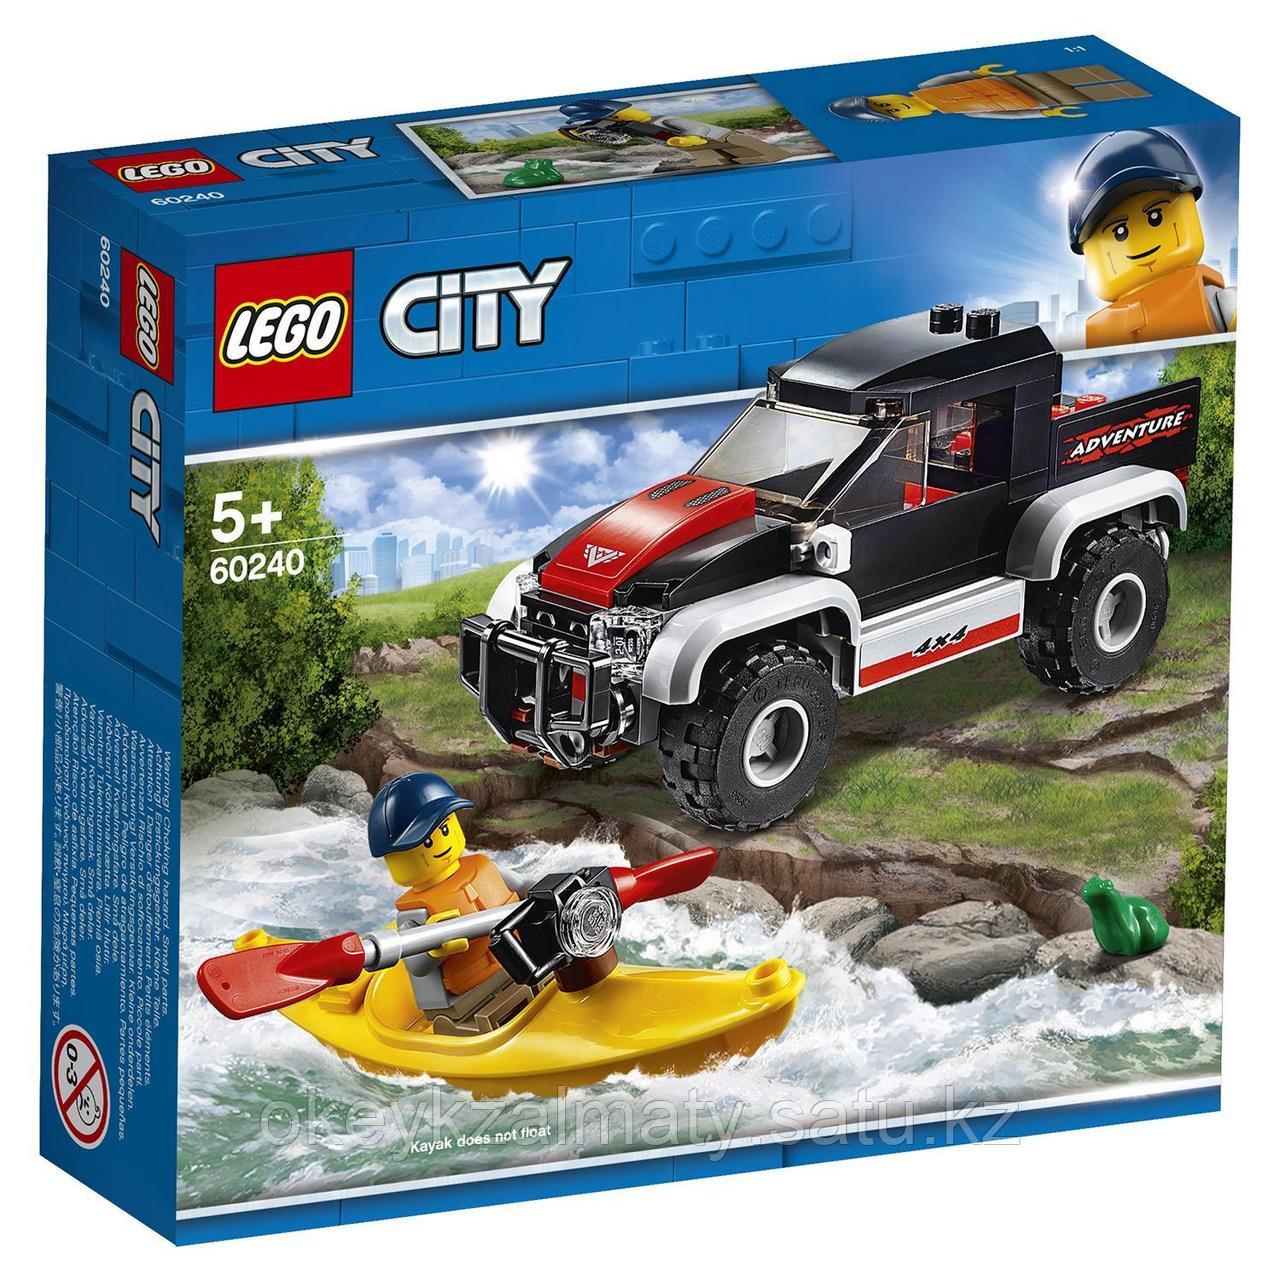 LEGO City: Сплав на байдарке 60240